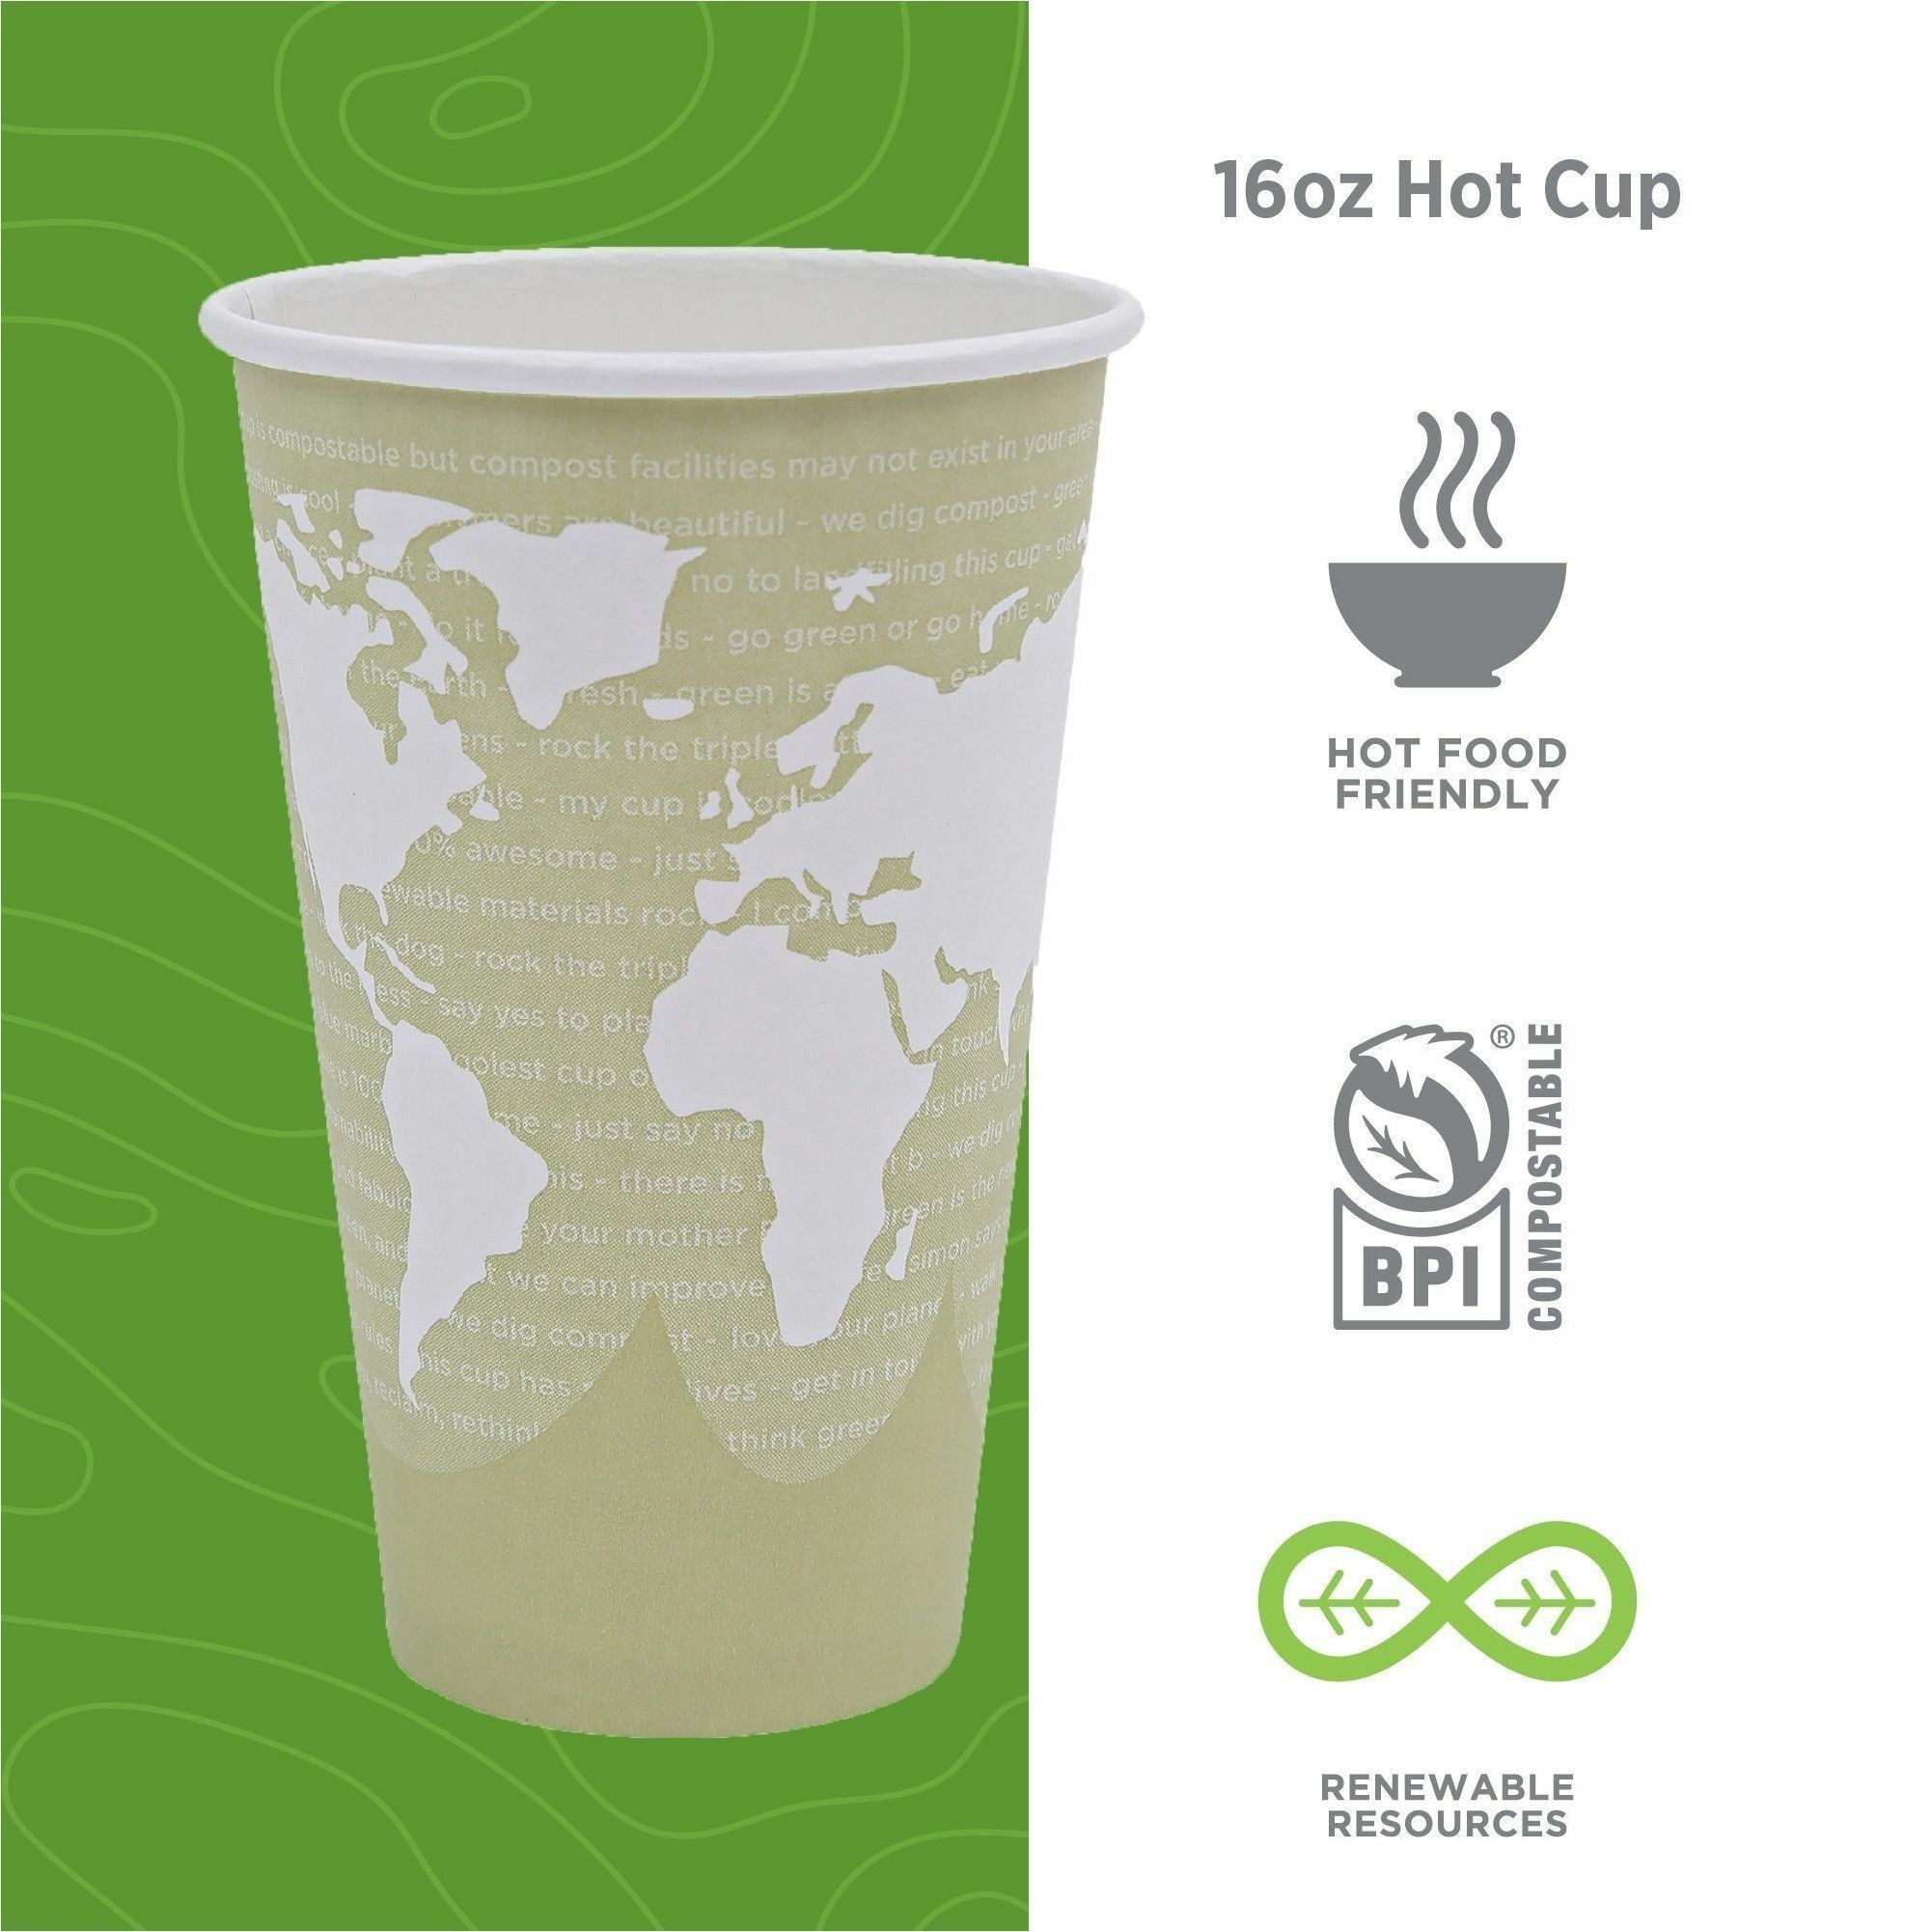 ECO-PRODUCTS,INC. Eco-Products World Art Hot Beverage Cups - ECOEPBHC12WA 